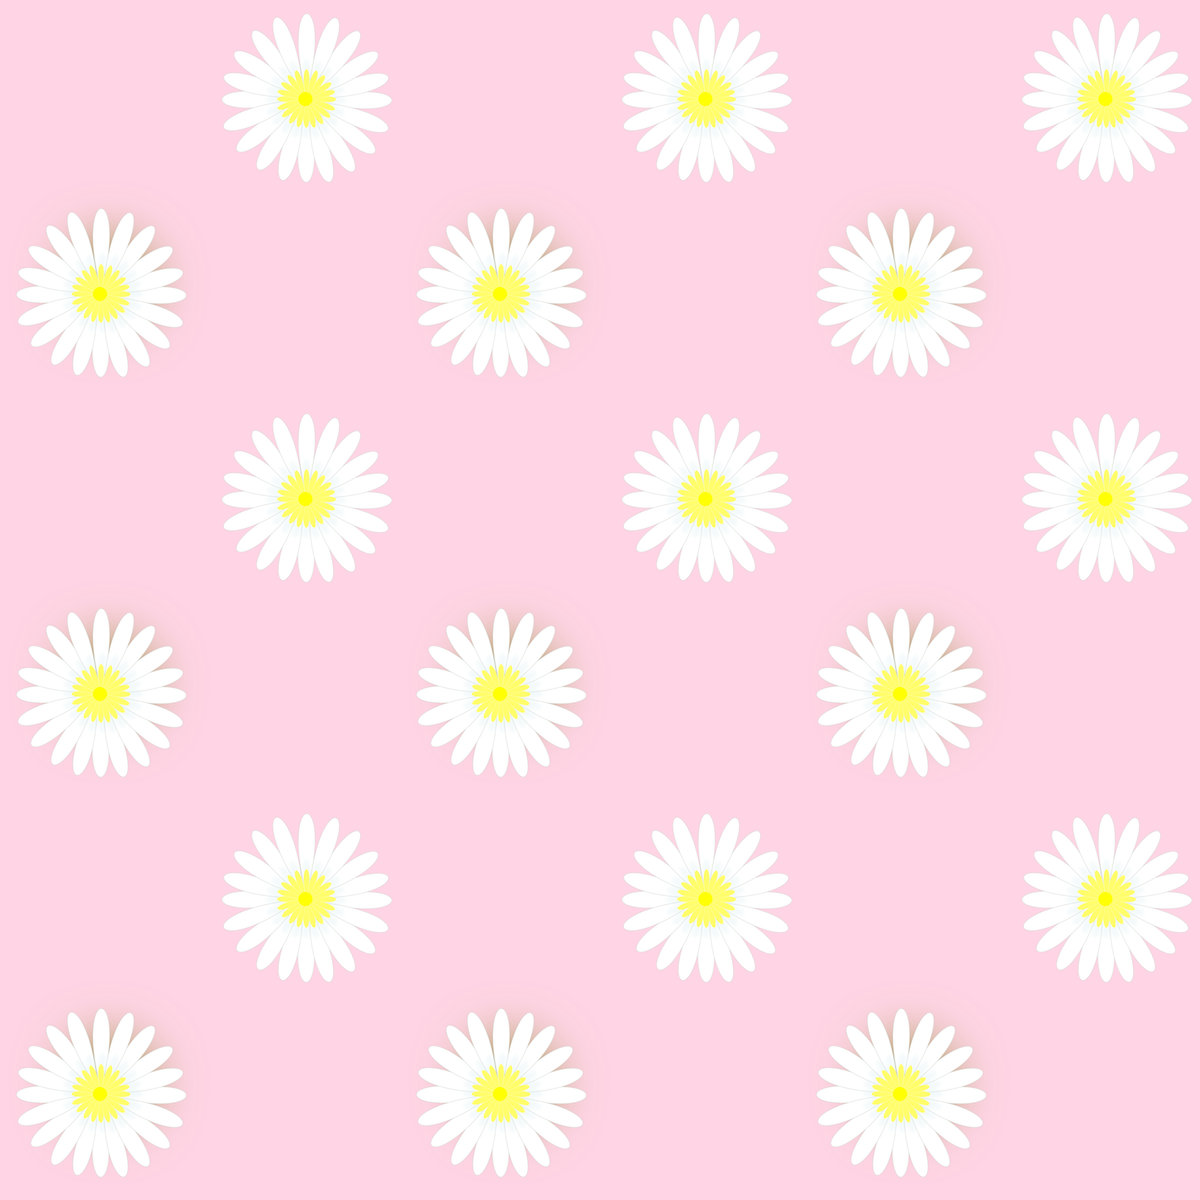  digital daisy flower scrapbooking papers   ausdruckbare 1200x1200